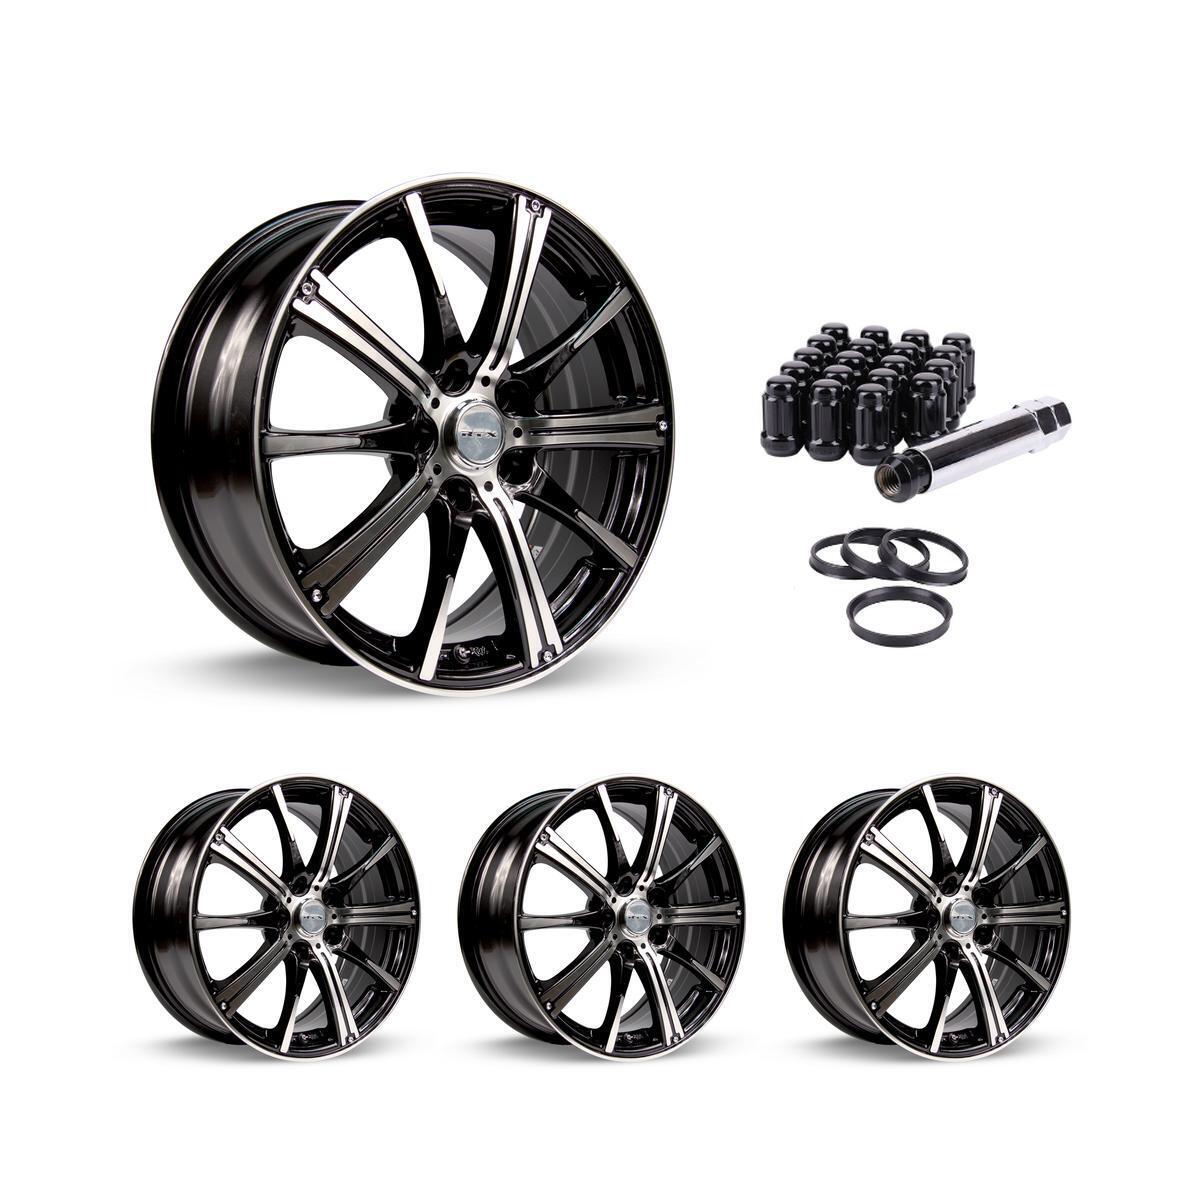 Wheel Rims Set with Black Lug Nuts Kit for 90-00 Mazda Protege P810212 15 inch